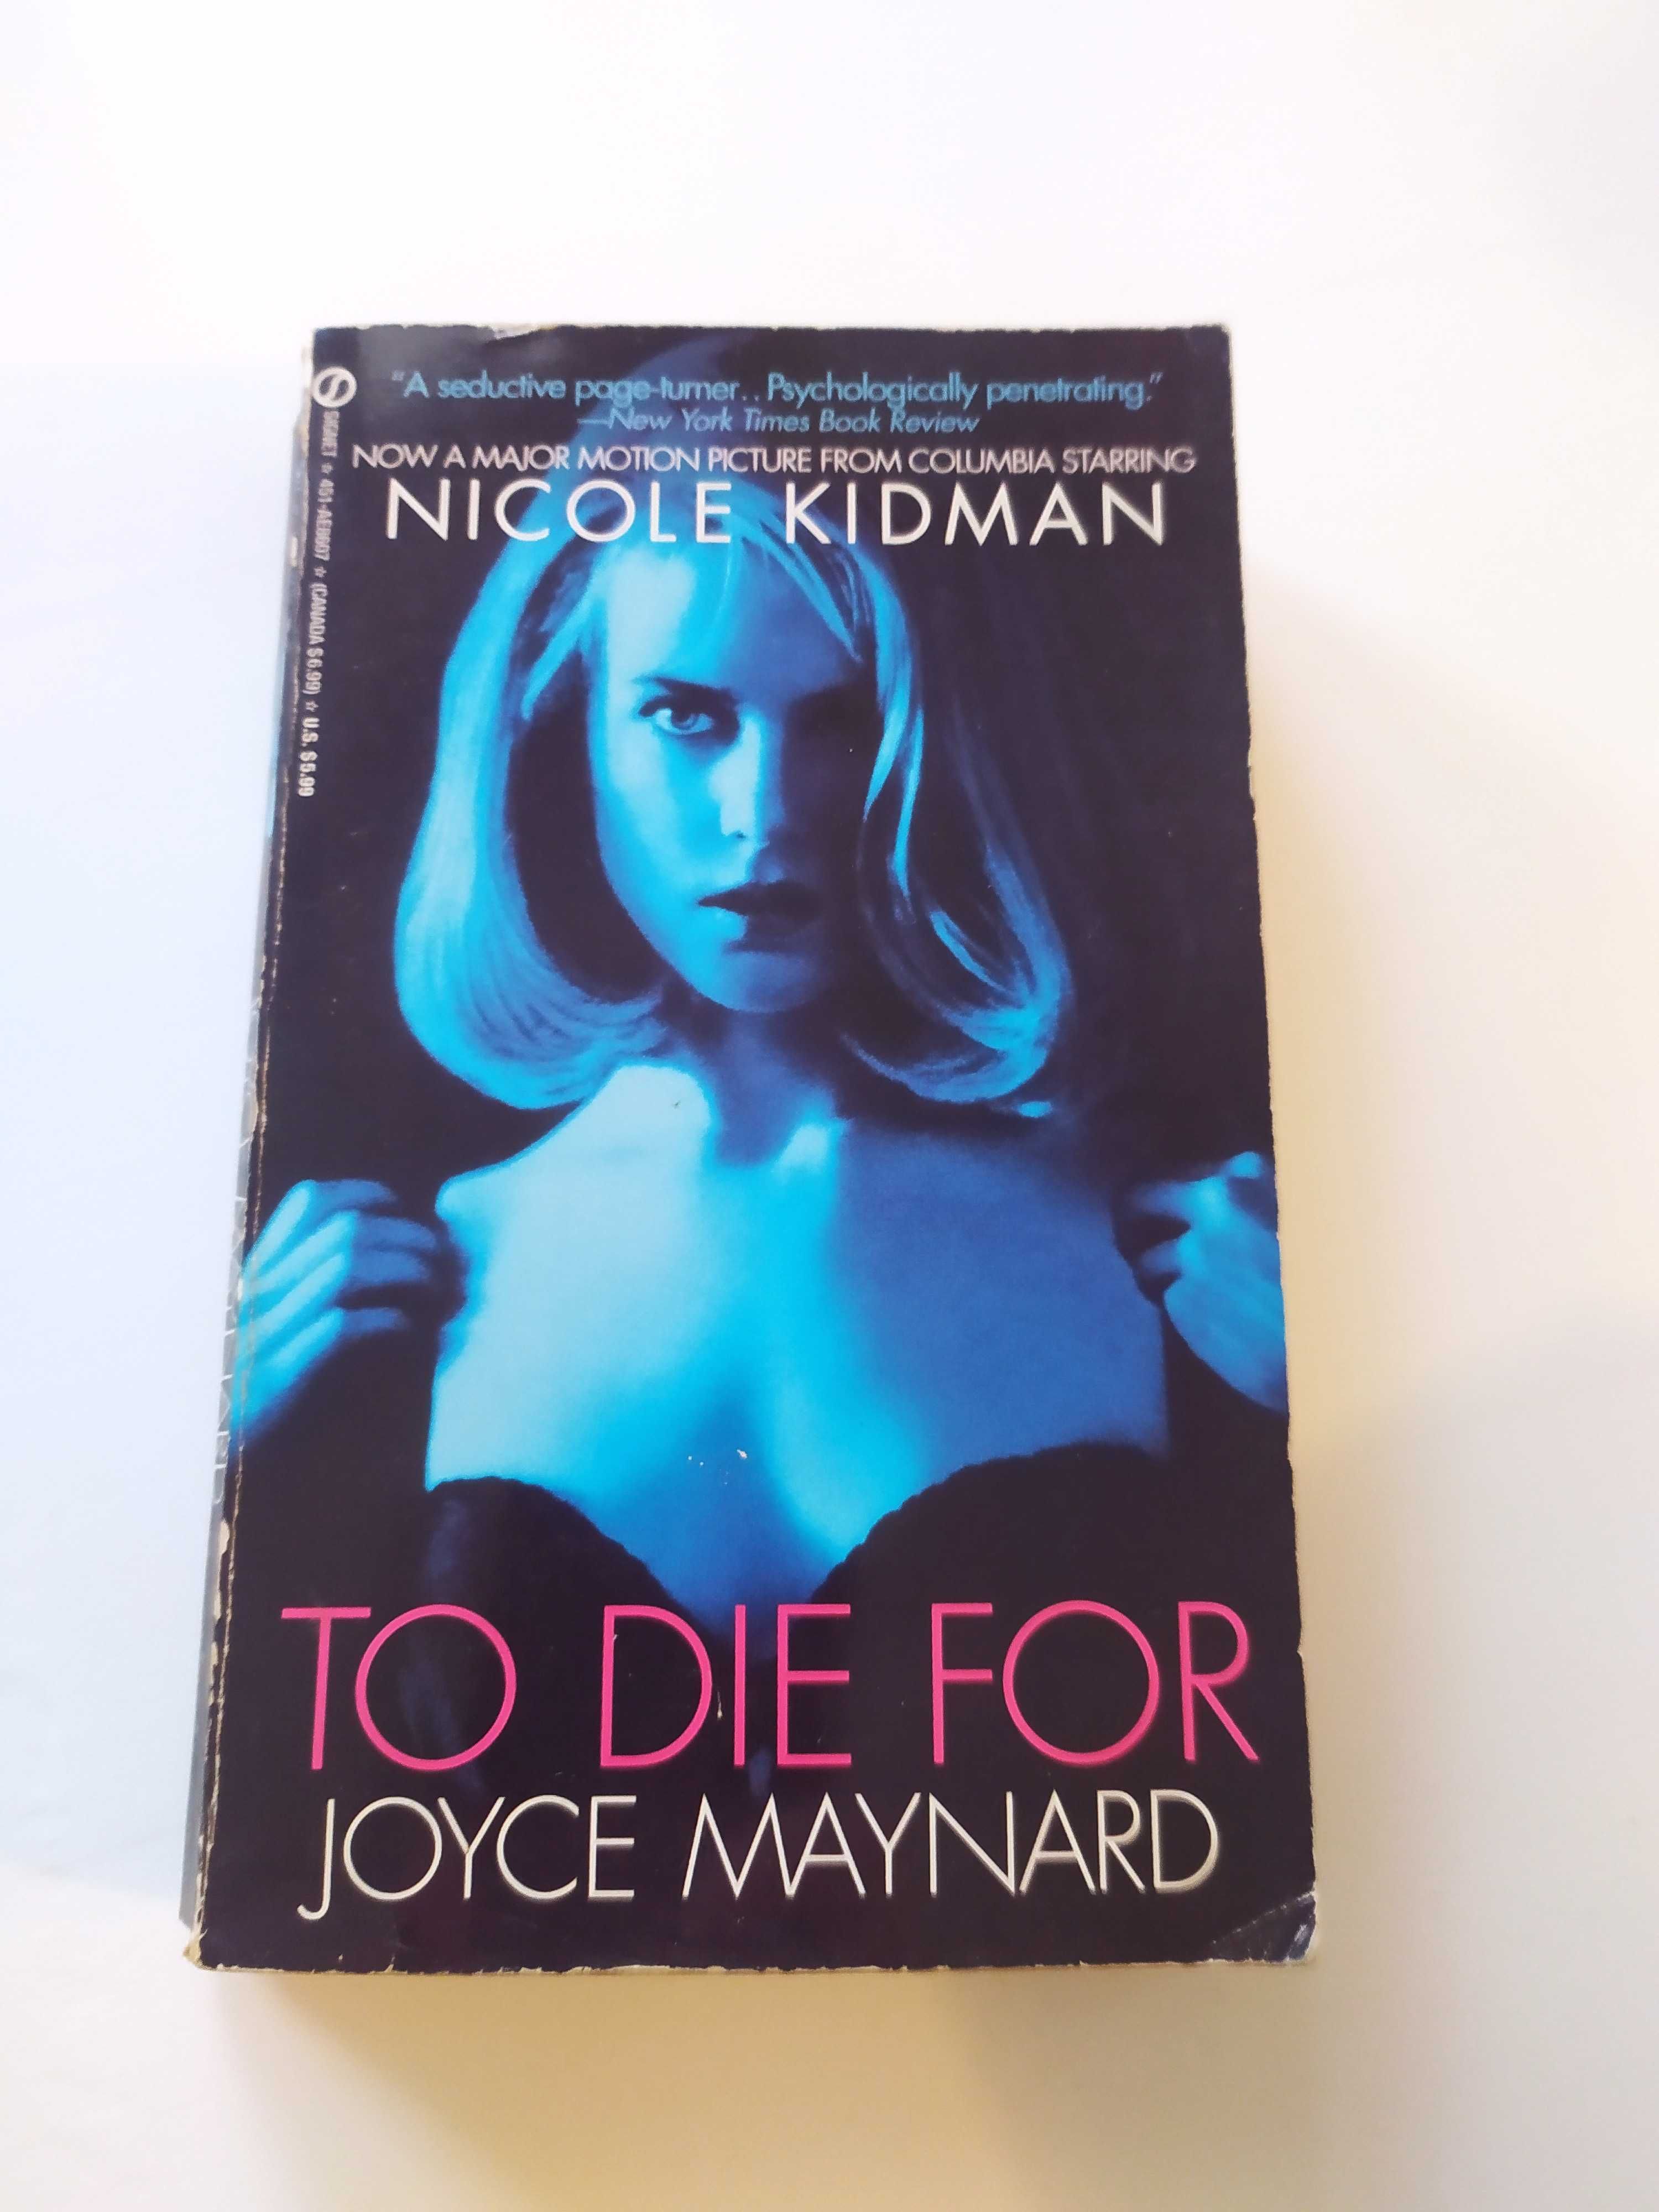 Joyce Maynard ## To die for ## Nicole Kidman